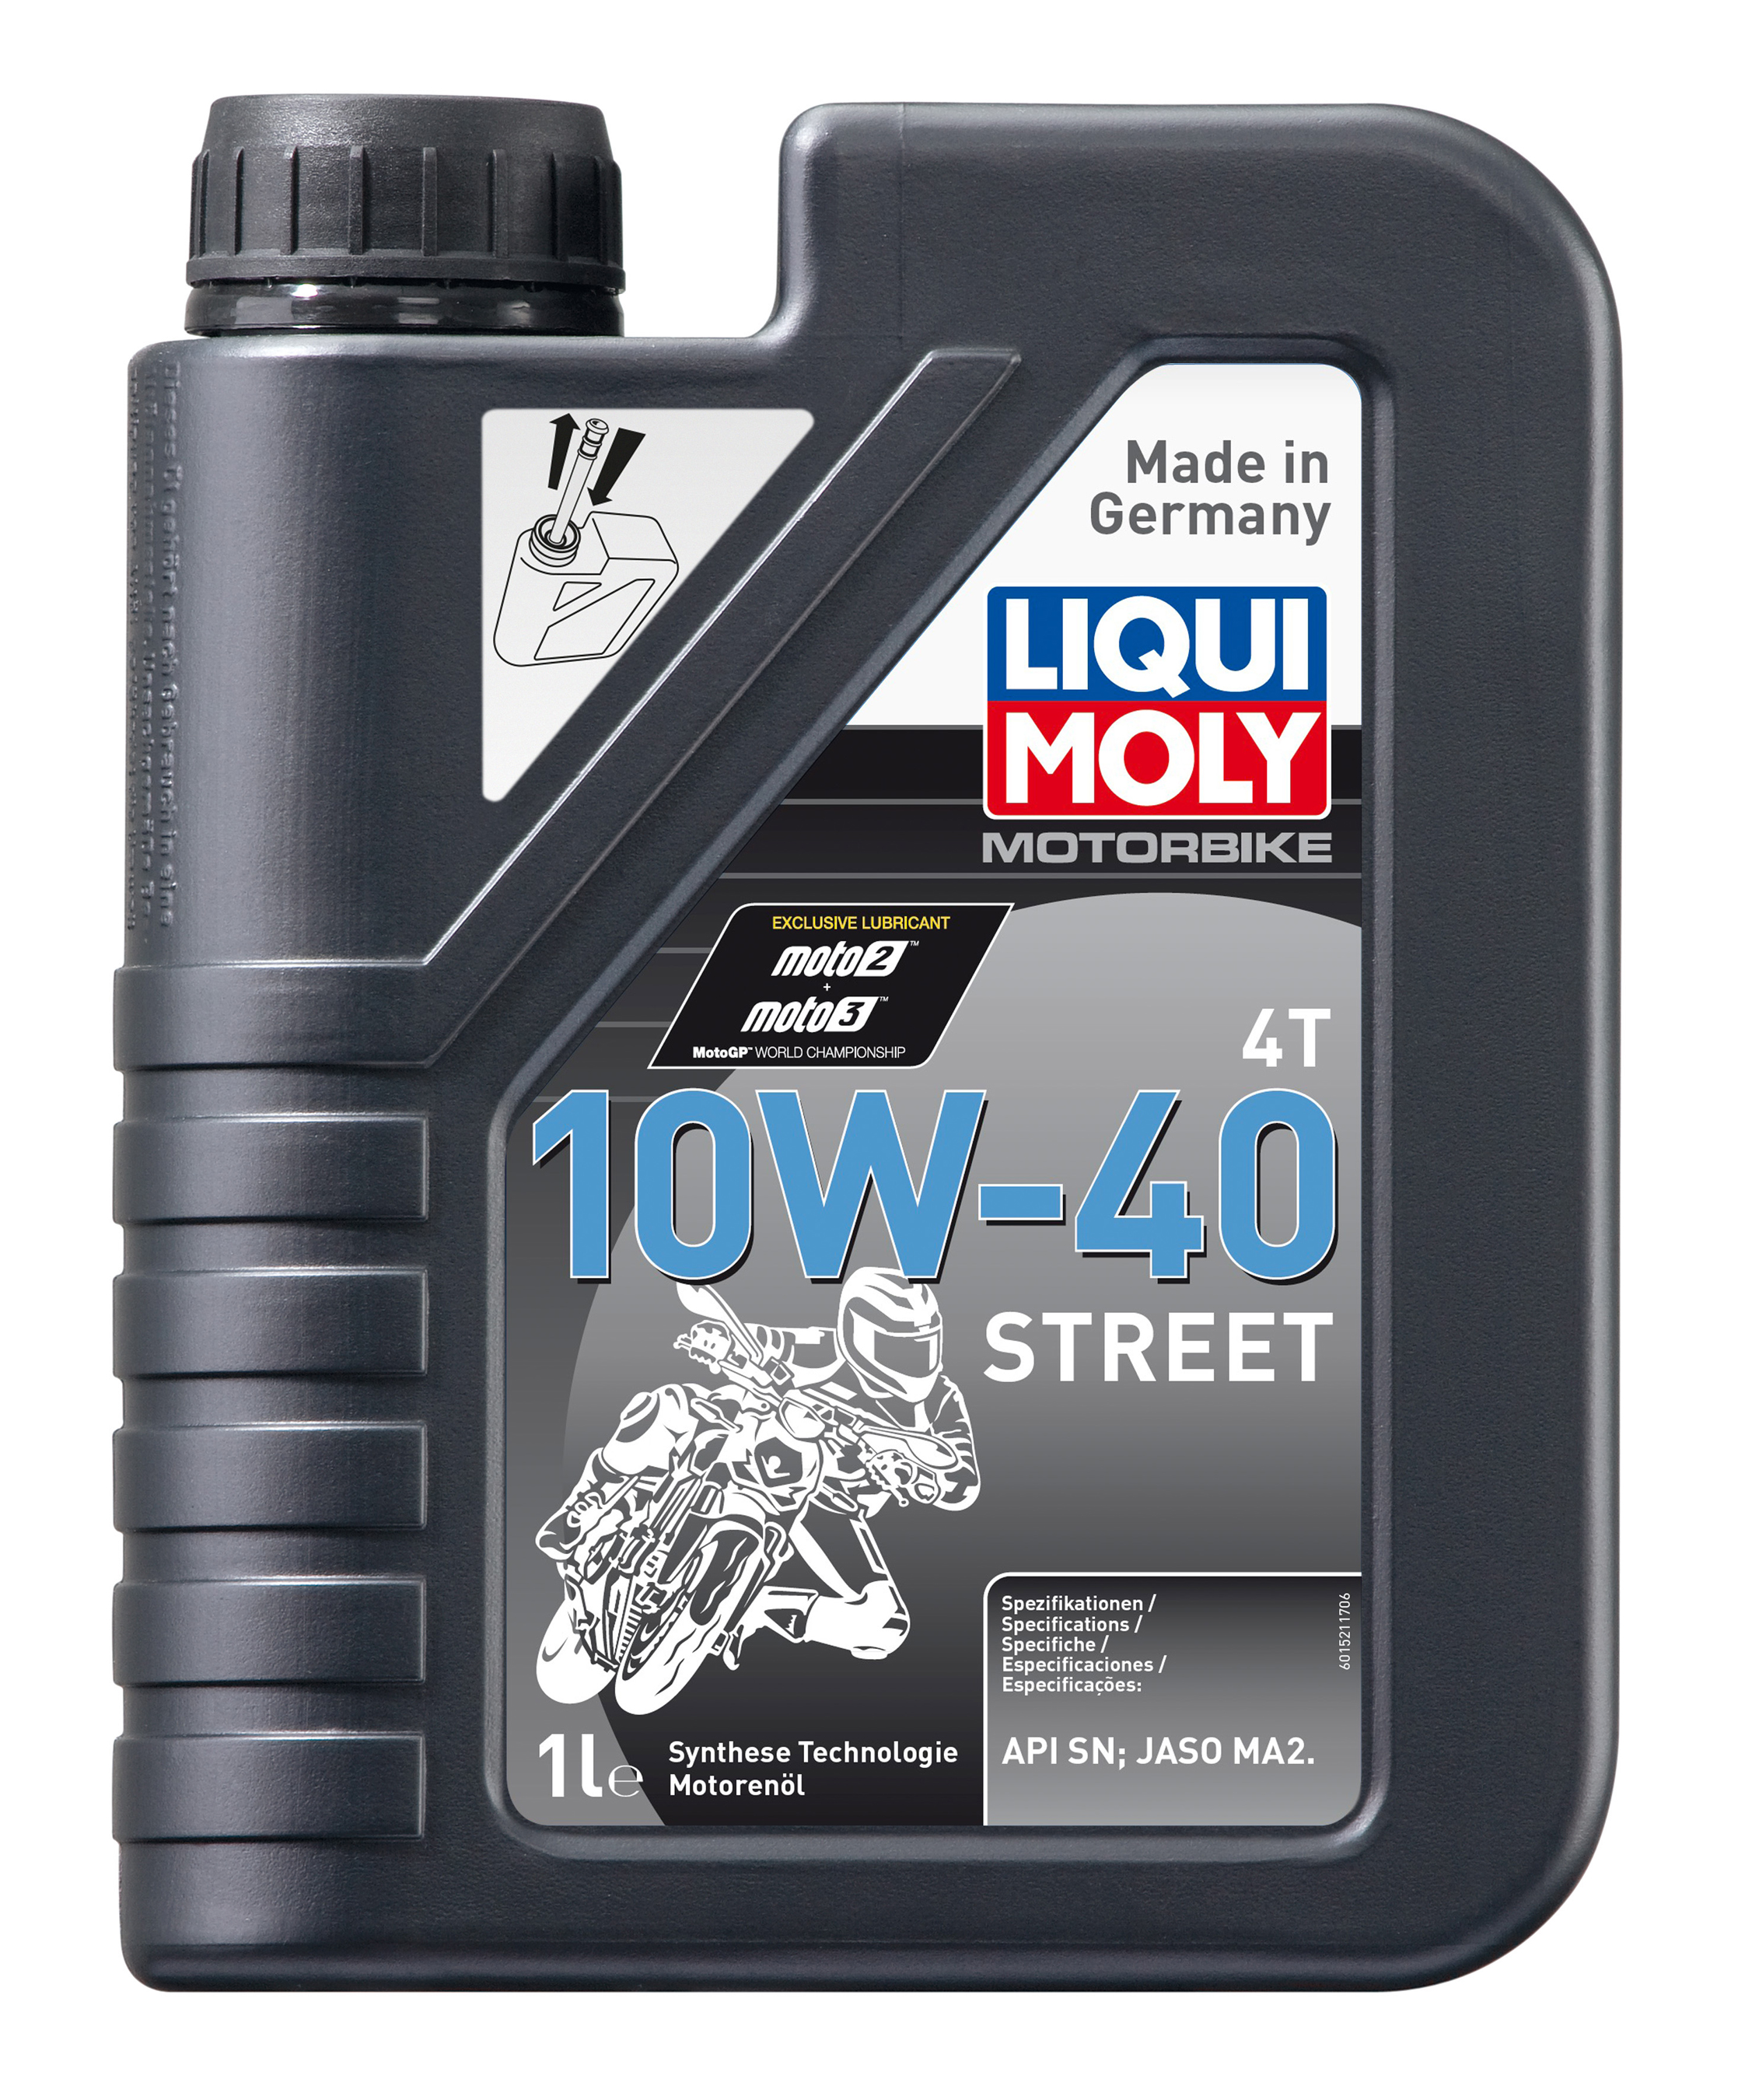 Liqui Moly Motoröl Motorbike 4T 10W-40 Street
 1 Liter